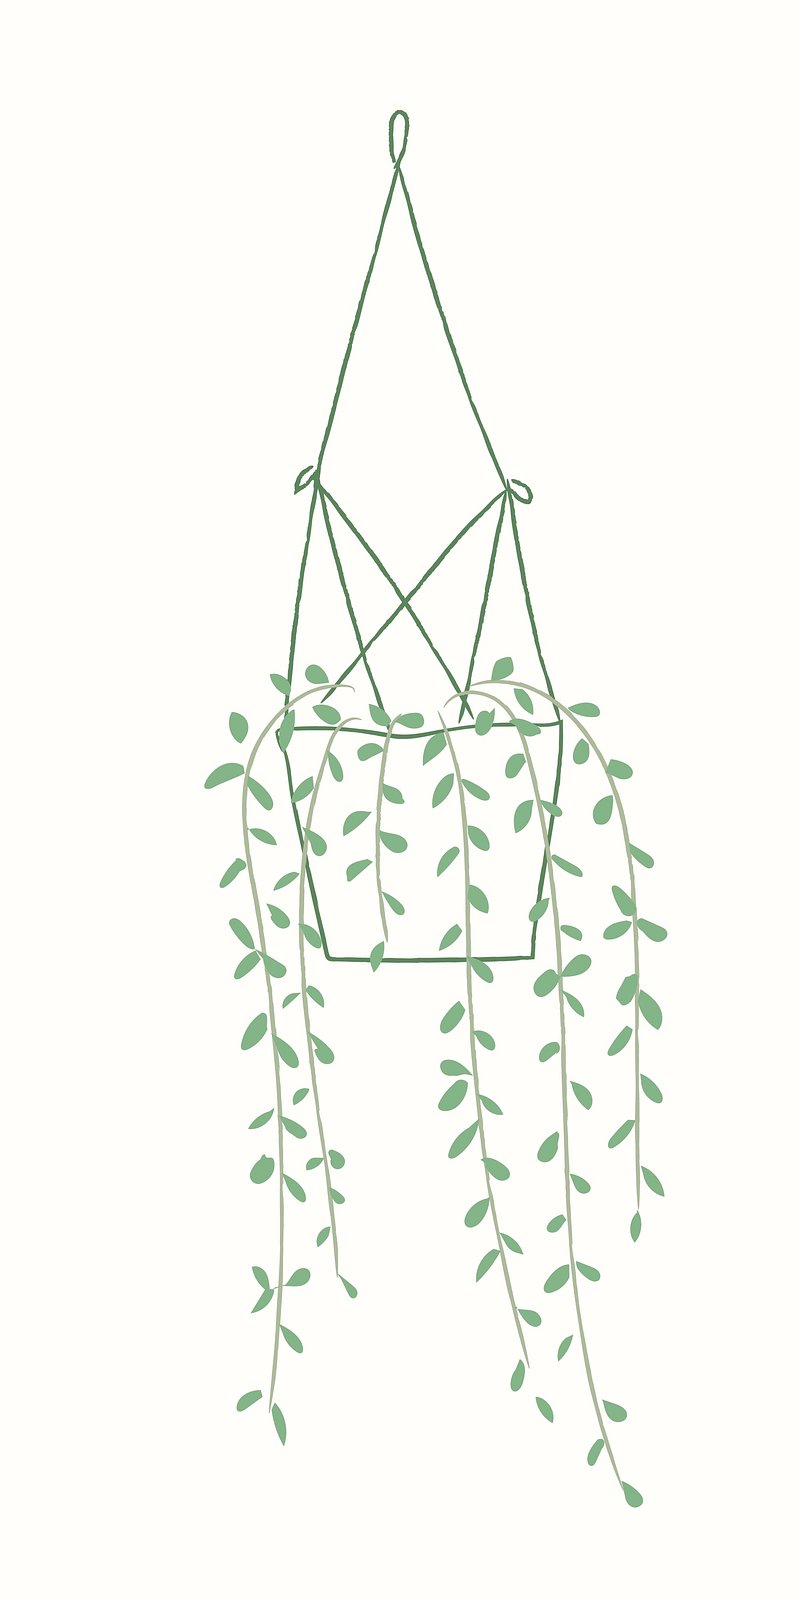 Hanging plant vector houseplant doodle | Premium Vector Illustration ...